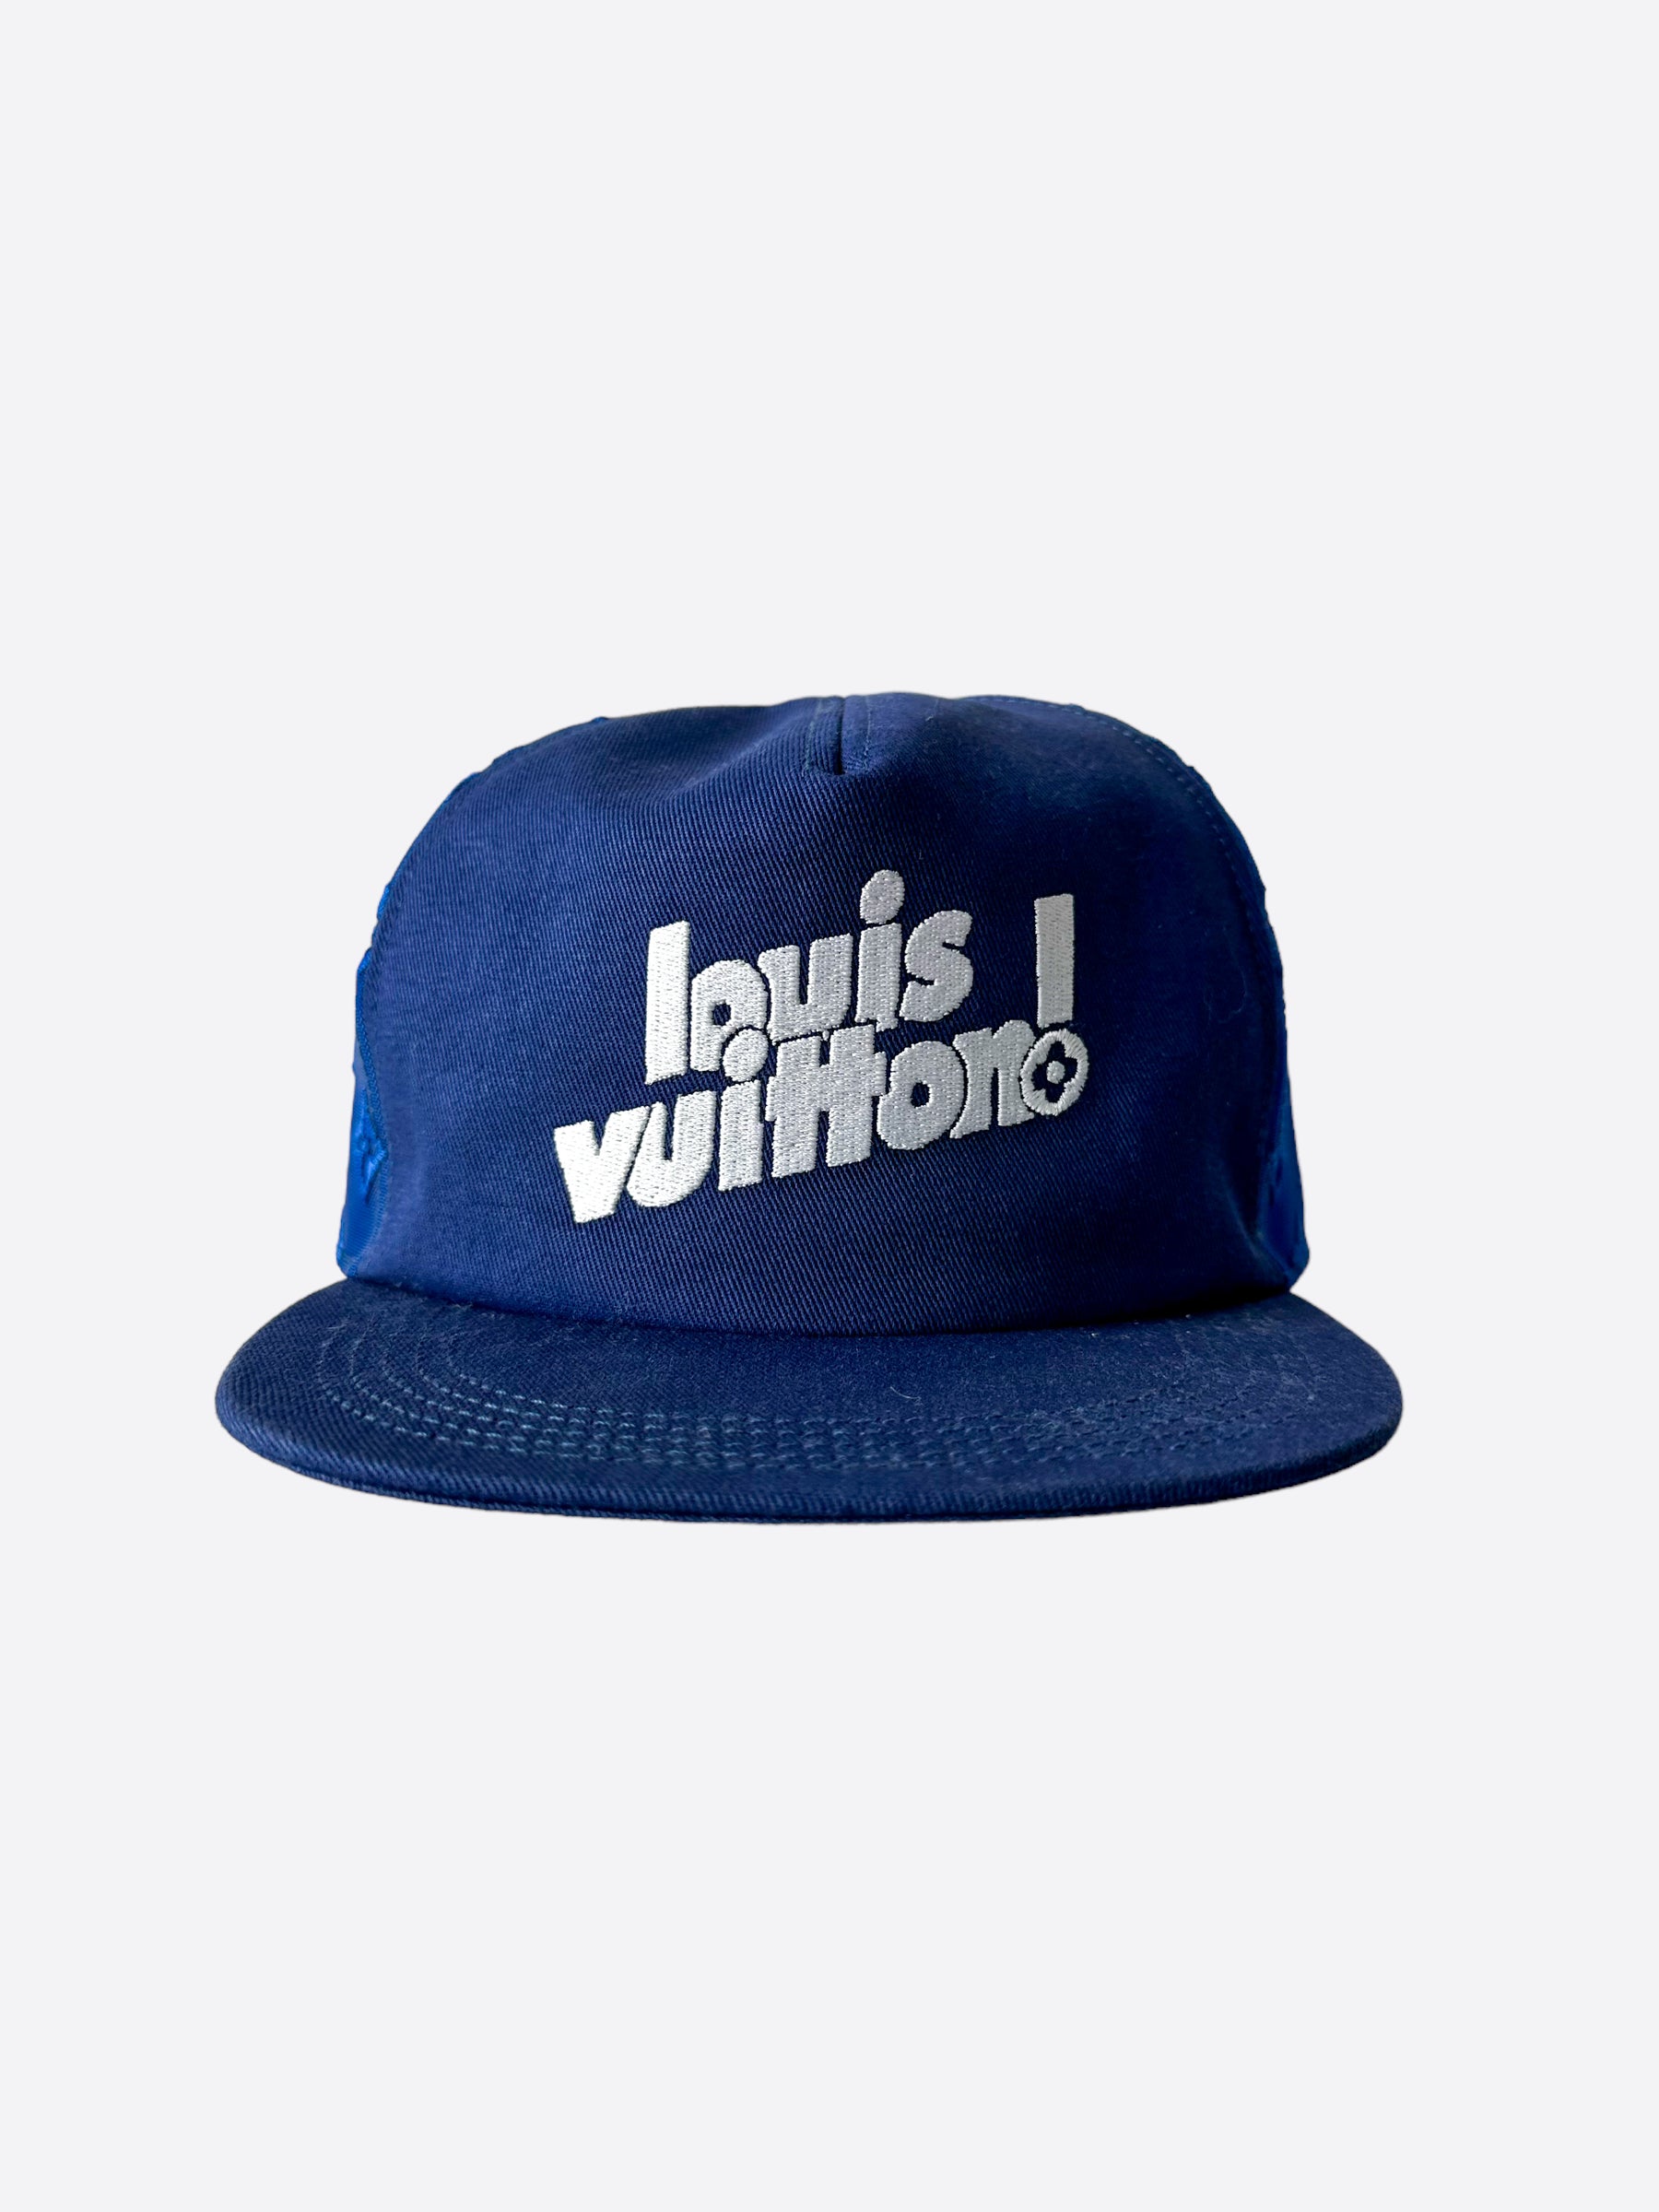 Louis Vuitton - Black LV Mesh Monogram Trucker Hat – eluXive